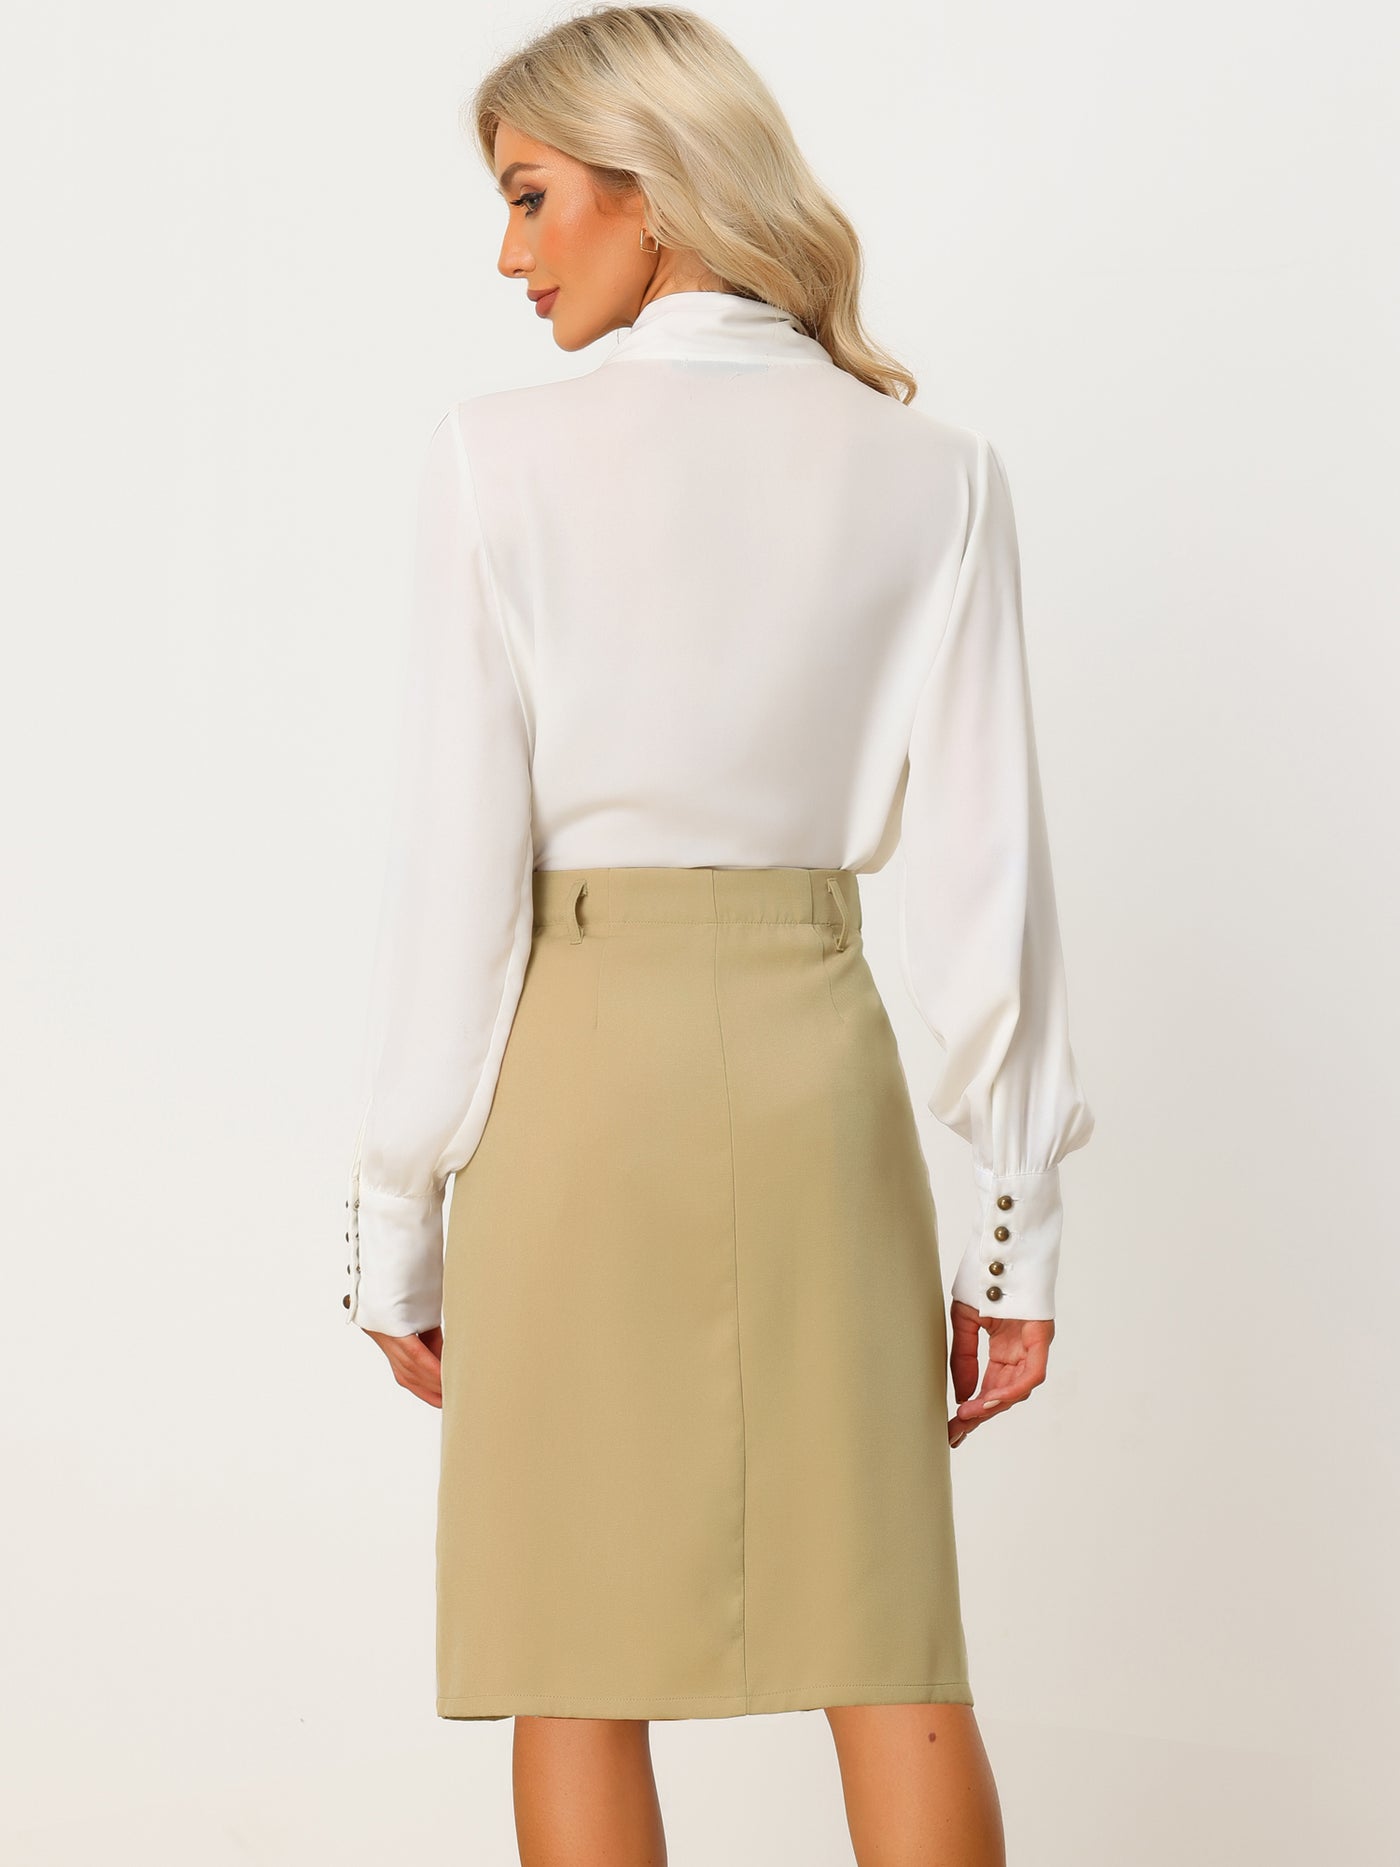 Allegra K Casual Work Skirt for Women's Button Front Belted High Waist Midi Skirts